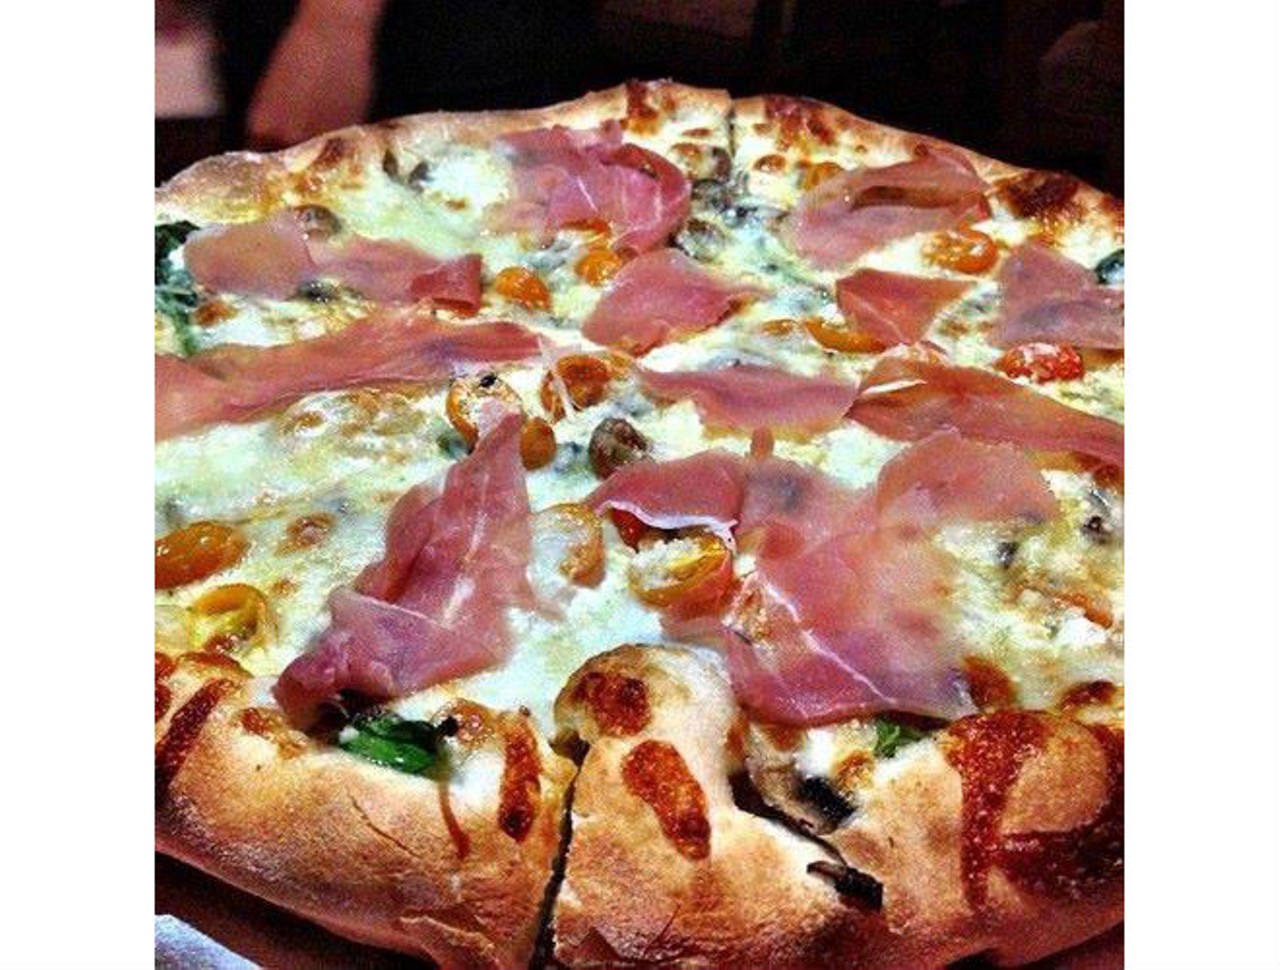 The prosciutto crudo pizza at Wolfie's Pizzamia.Image via Wolfie's Pizzamia